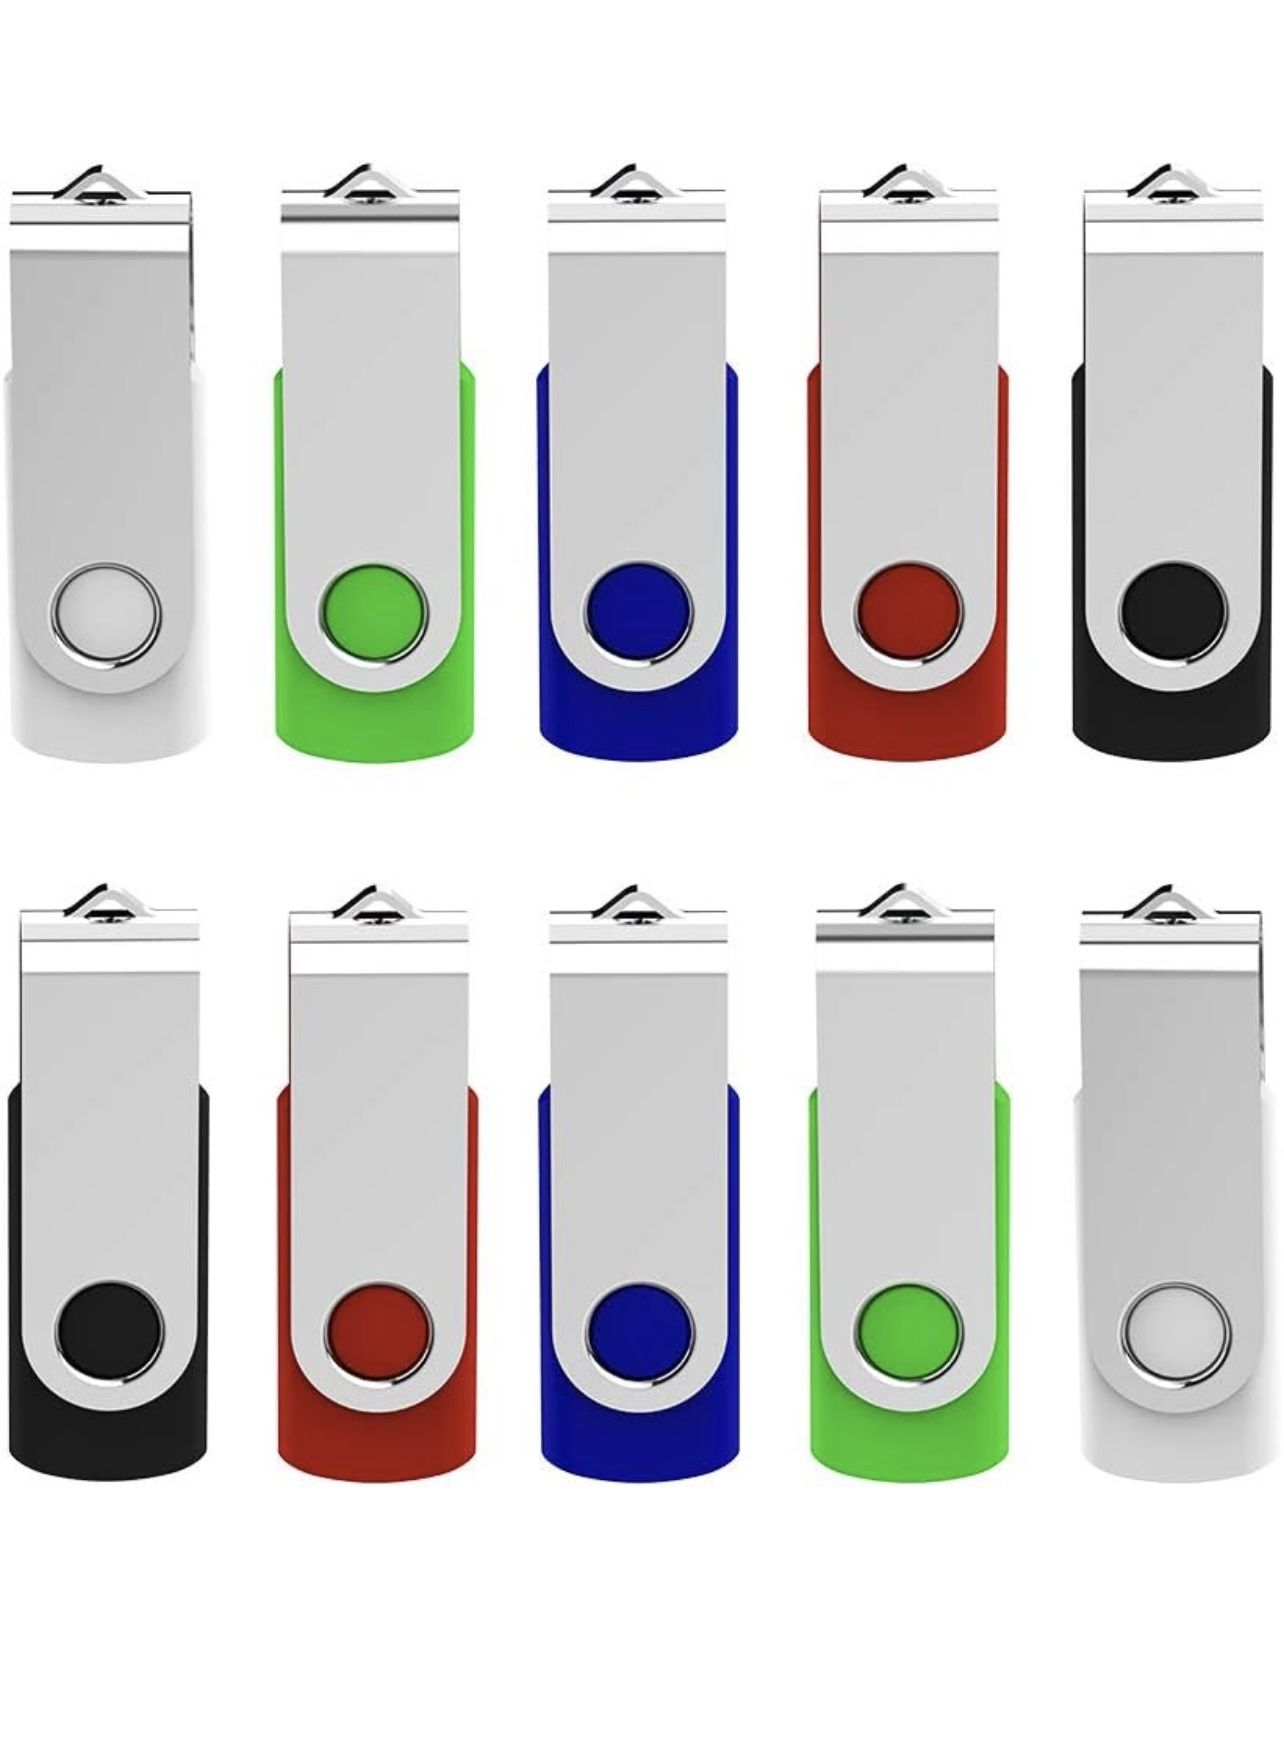 Flash Drive 32 GB USB Flash Drive 32gb 10 Pack Thumb Drive Jump Drive Flash Drives Memory Sticks Zip Drive, 10 Pack 5 Colors (Black, Blue, Green, Whit